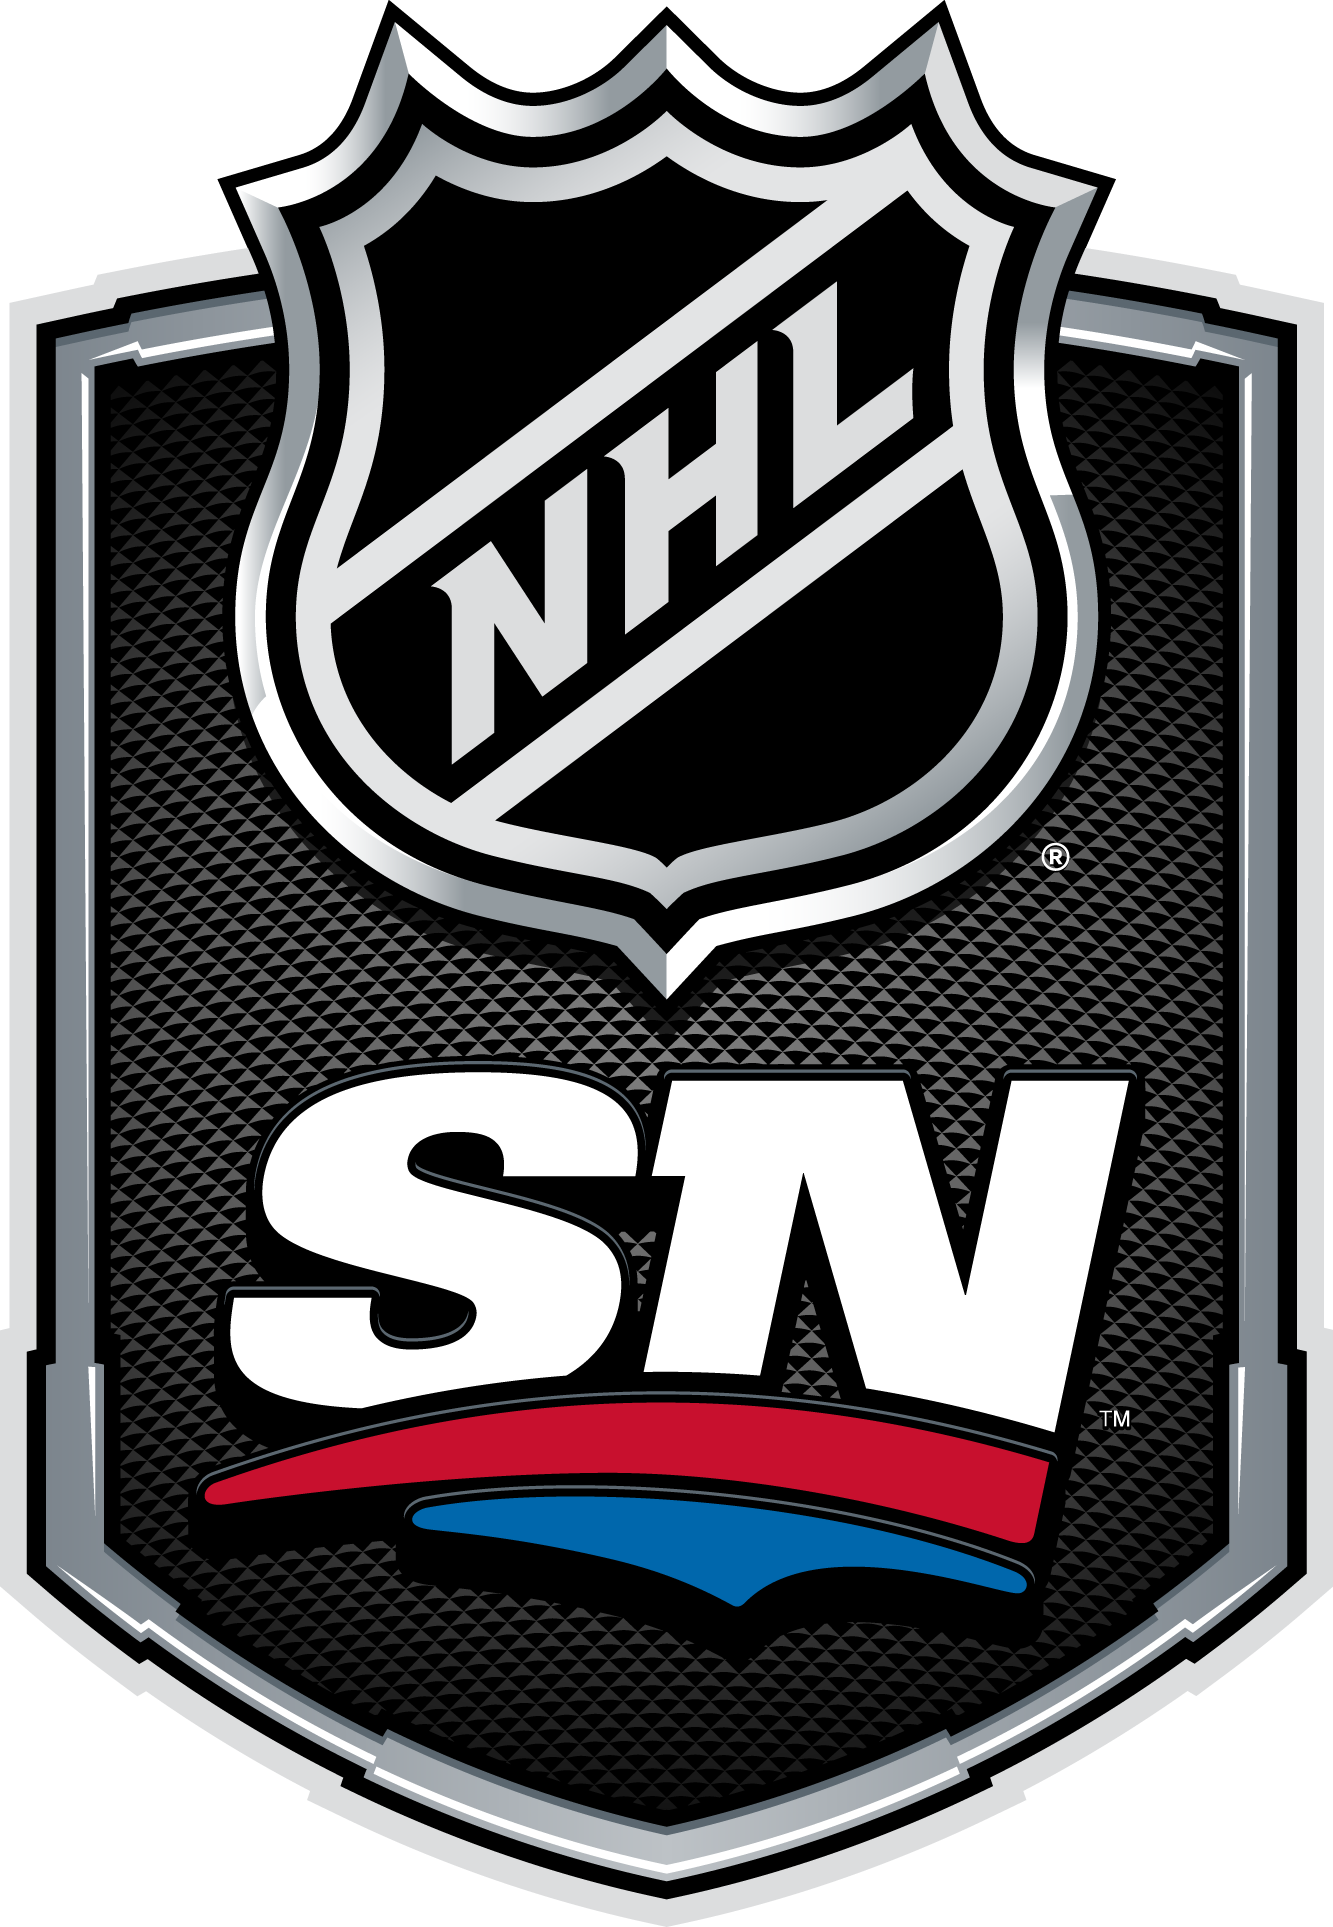 APTN score first Creelanguage NHL broadcast Cartt.ca